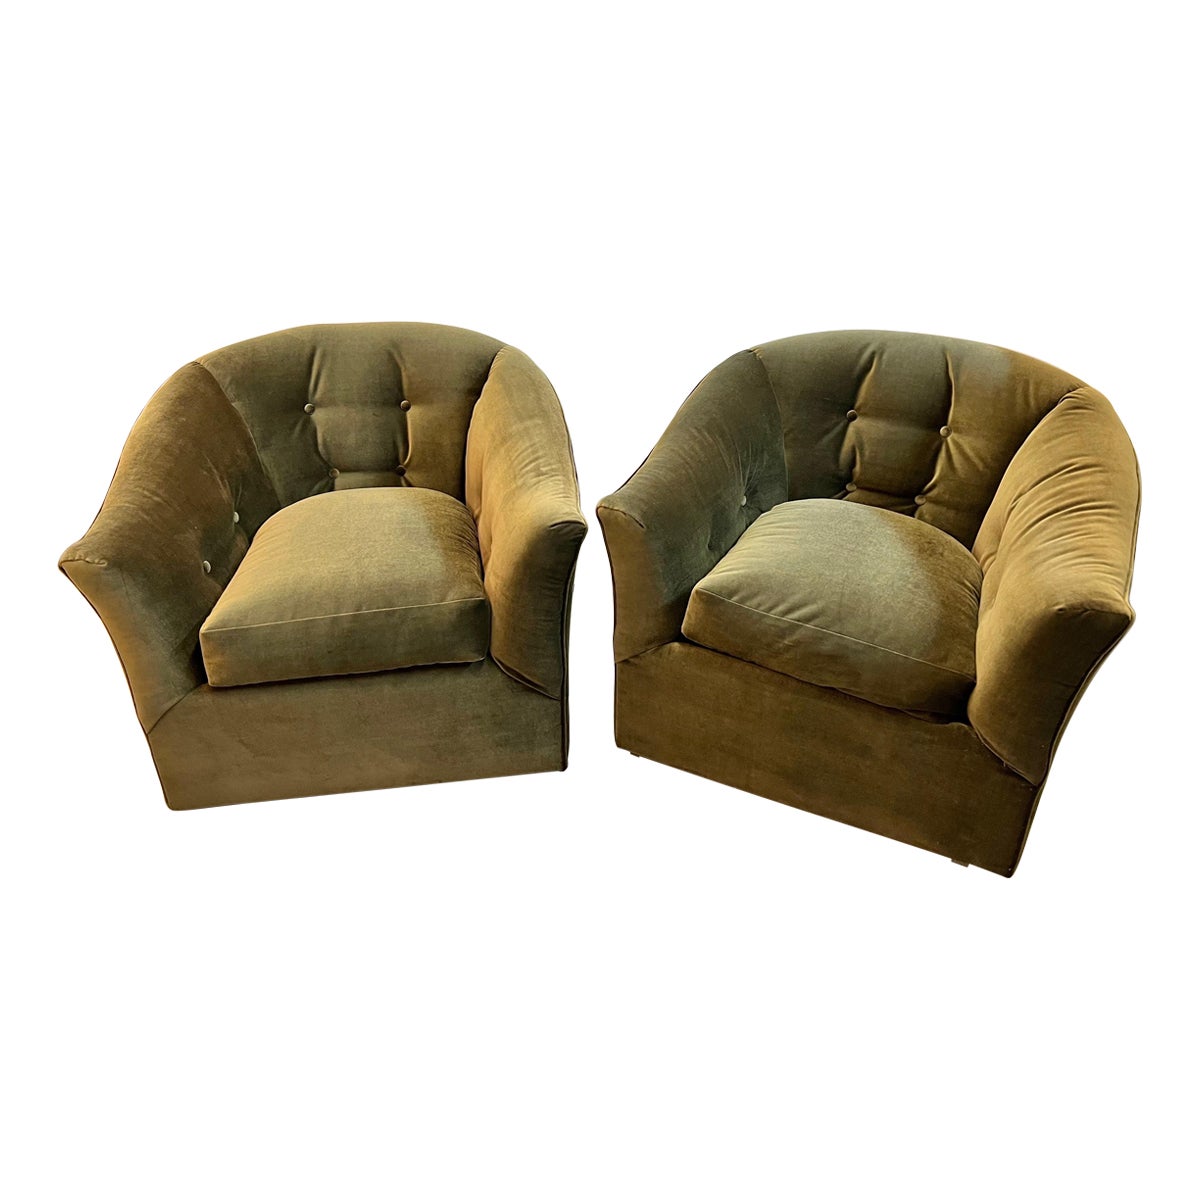 Pair of Mid-Century Modern Dark Olive Green Velvet Tufted Club Chairs